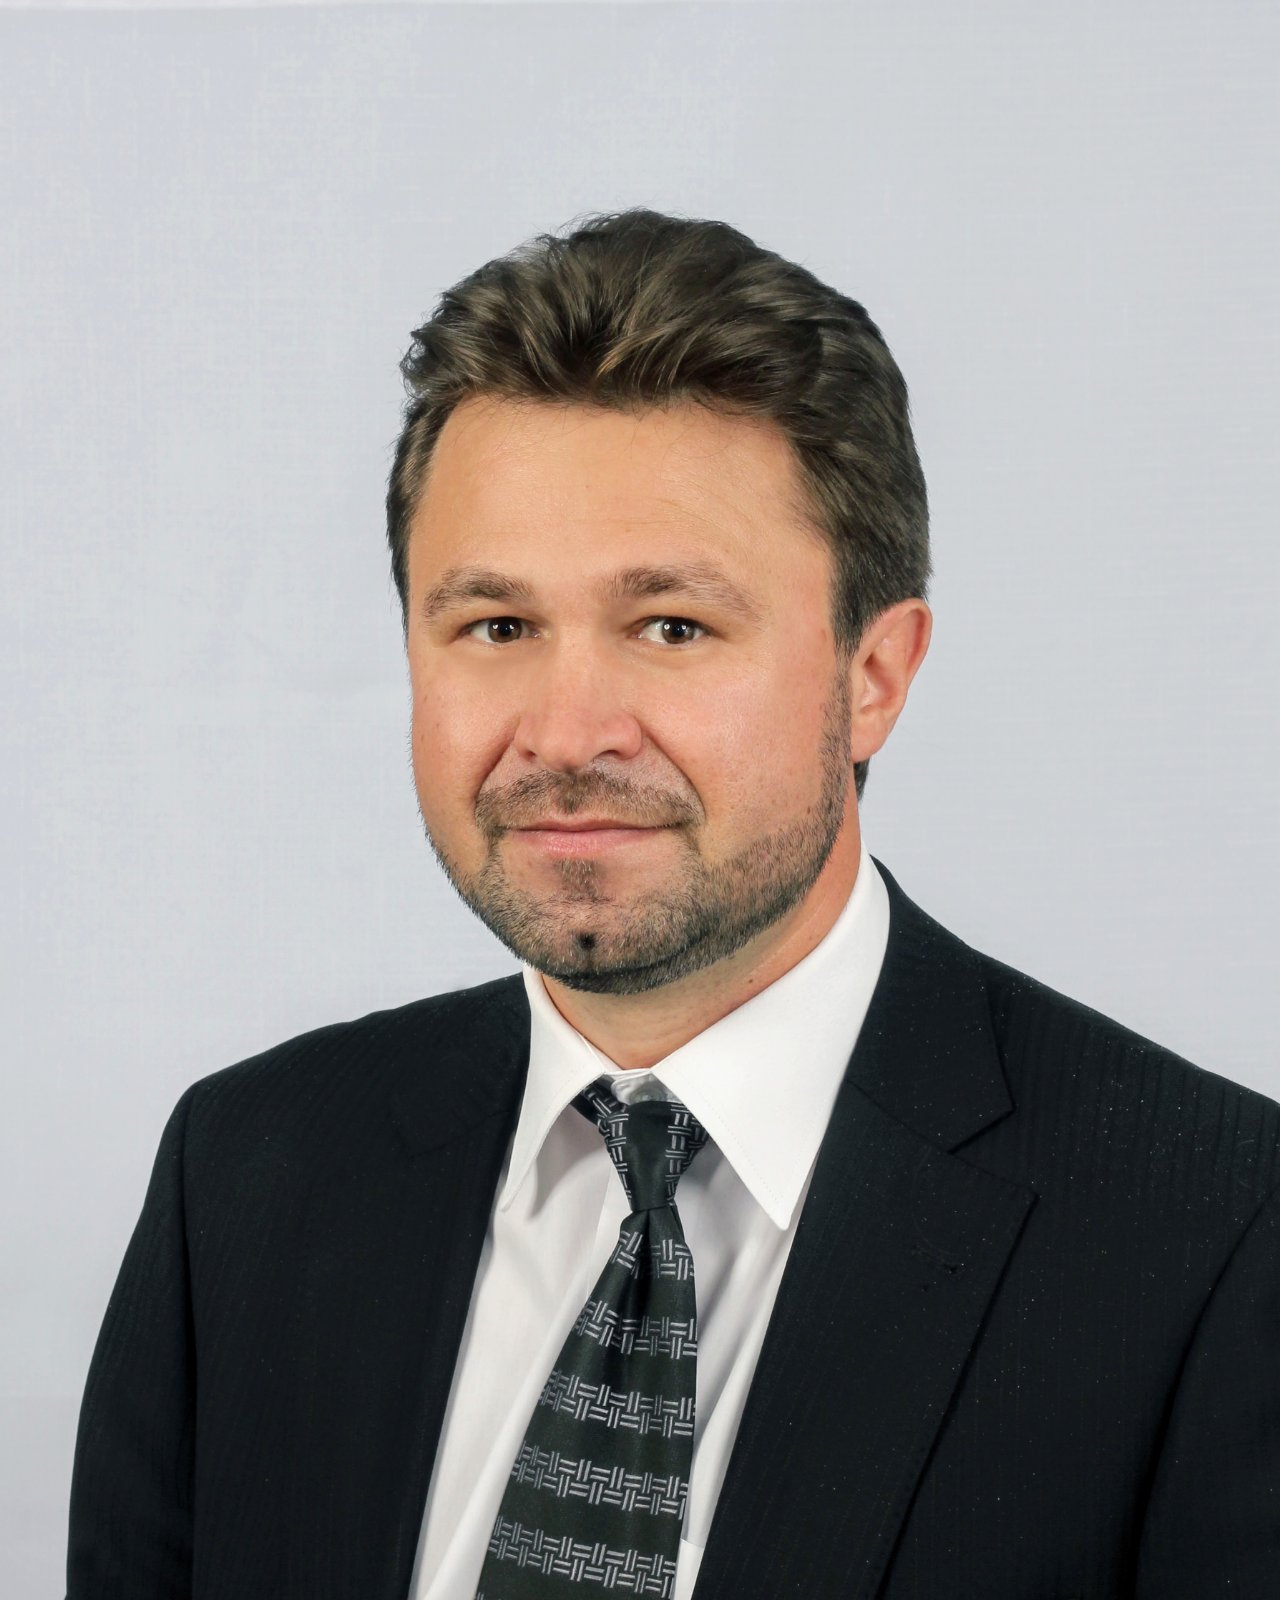 Д-р Светослав Стефанов е Семеен лекар на годината на Националното